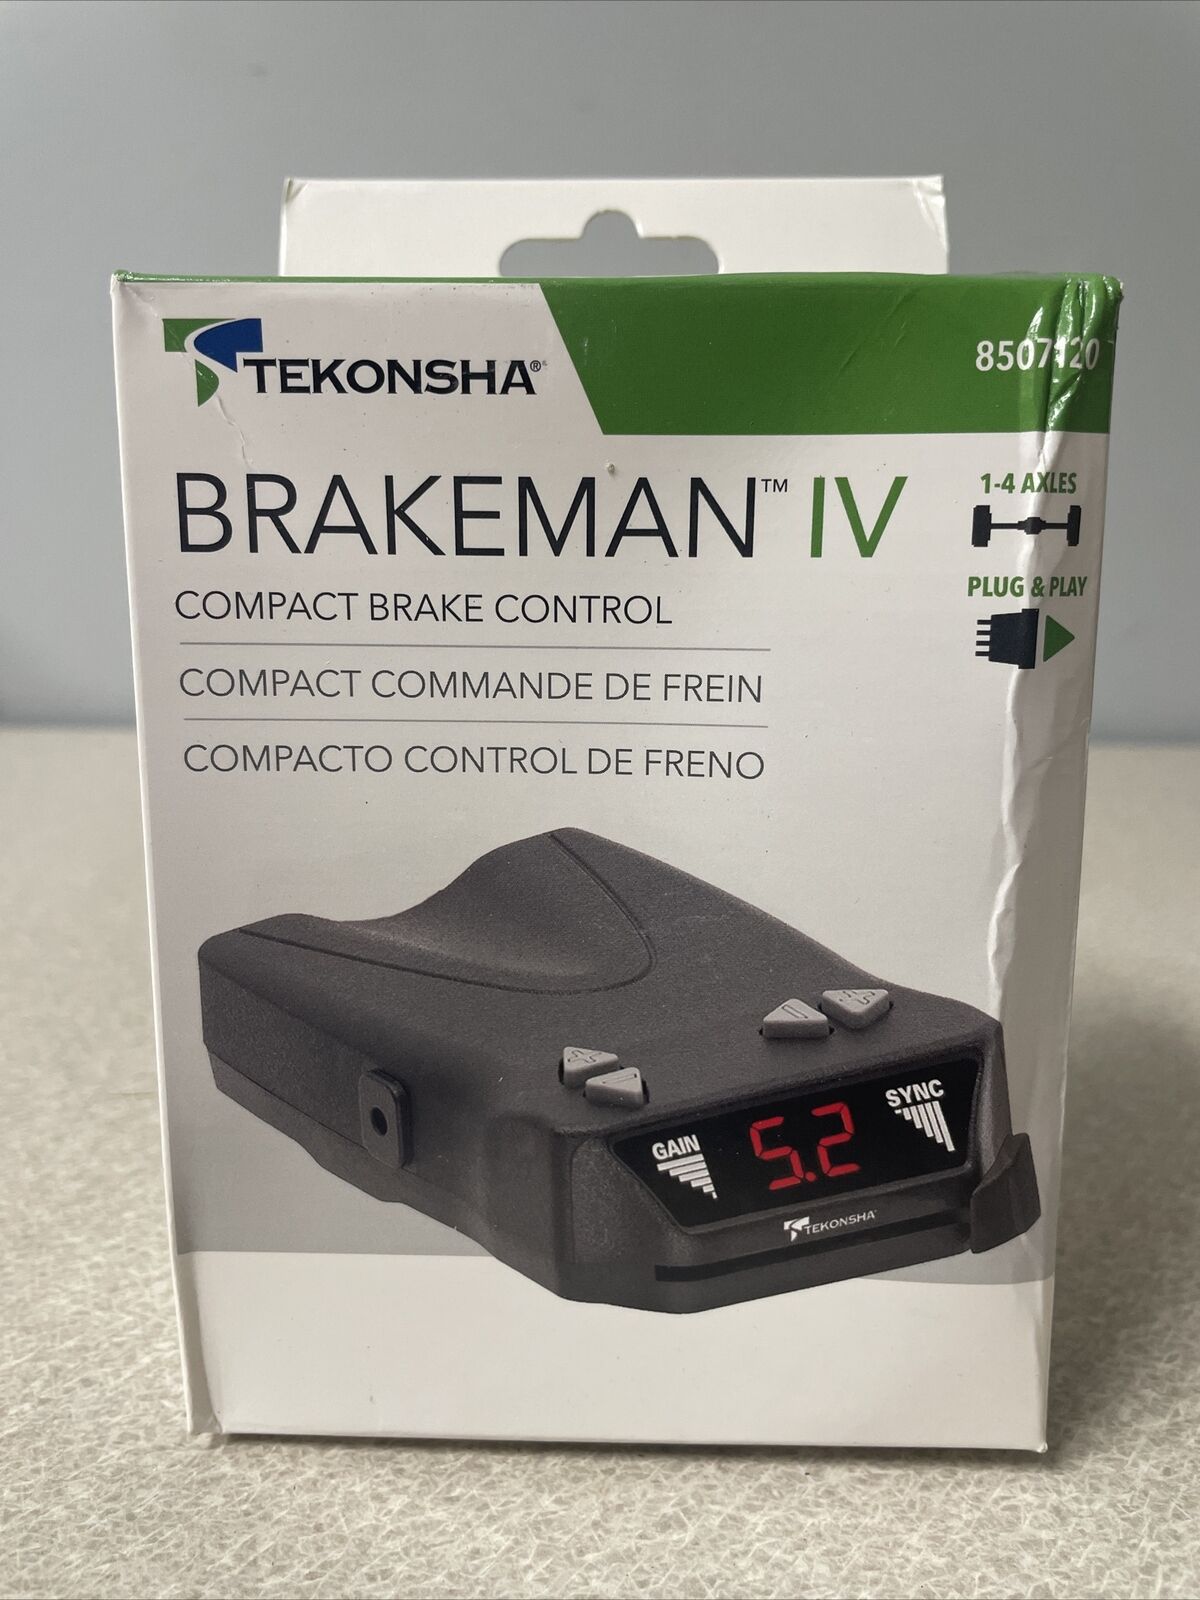 Tekonsha 8507120 Brakeman IV, Time-Delay Brake Controller for Trailers with 1-4,